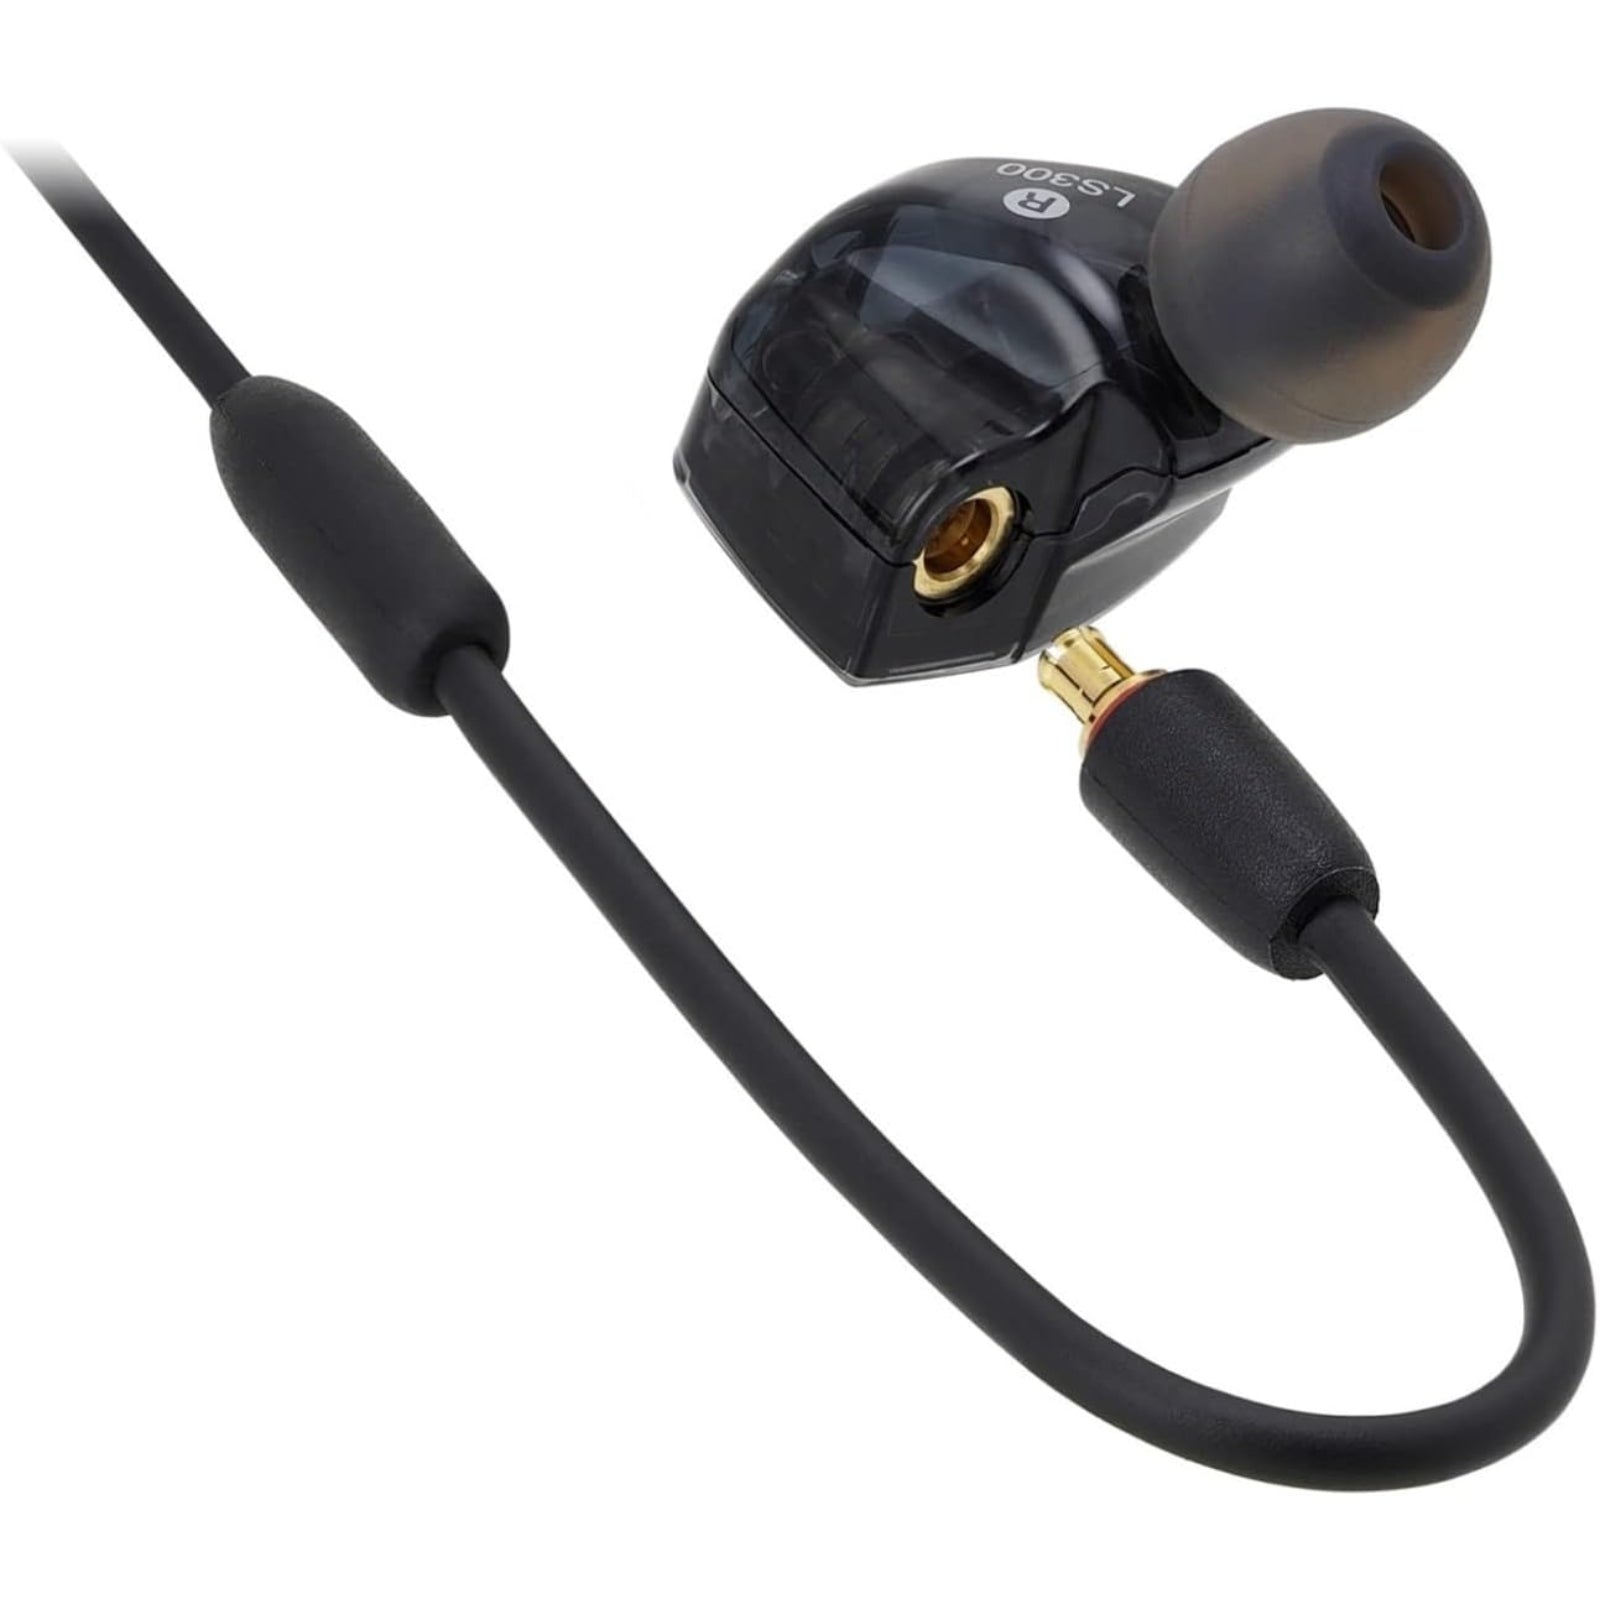 Audio-technica Ath-ls300is In-ear Headphones - MyMobile